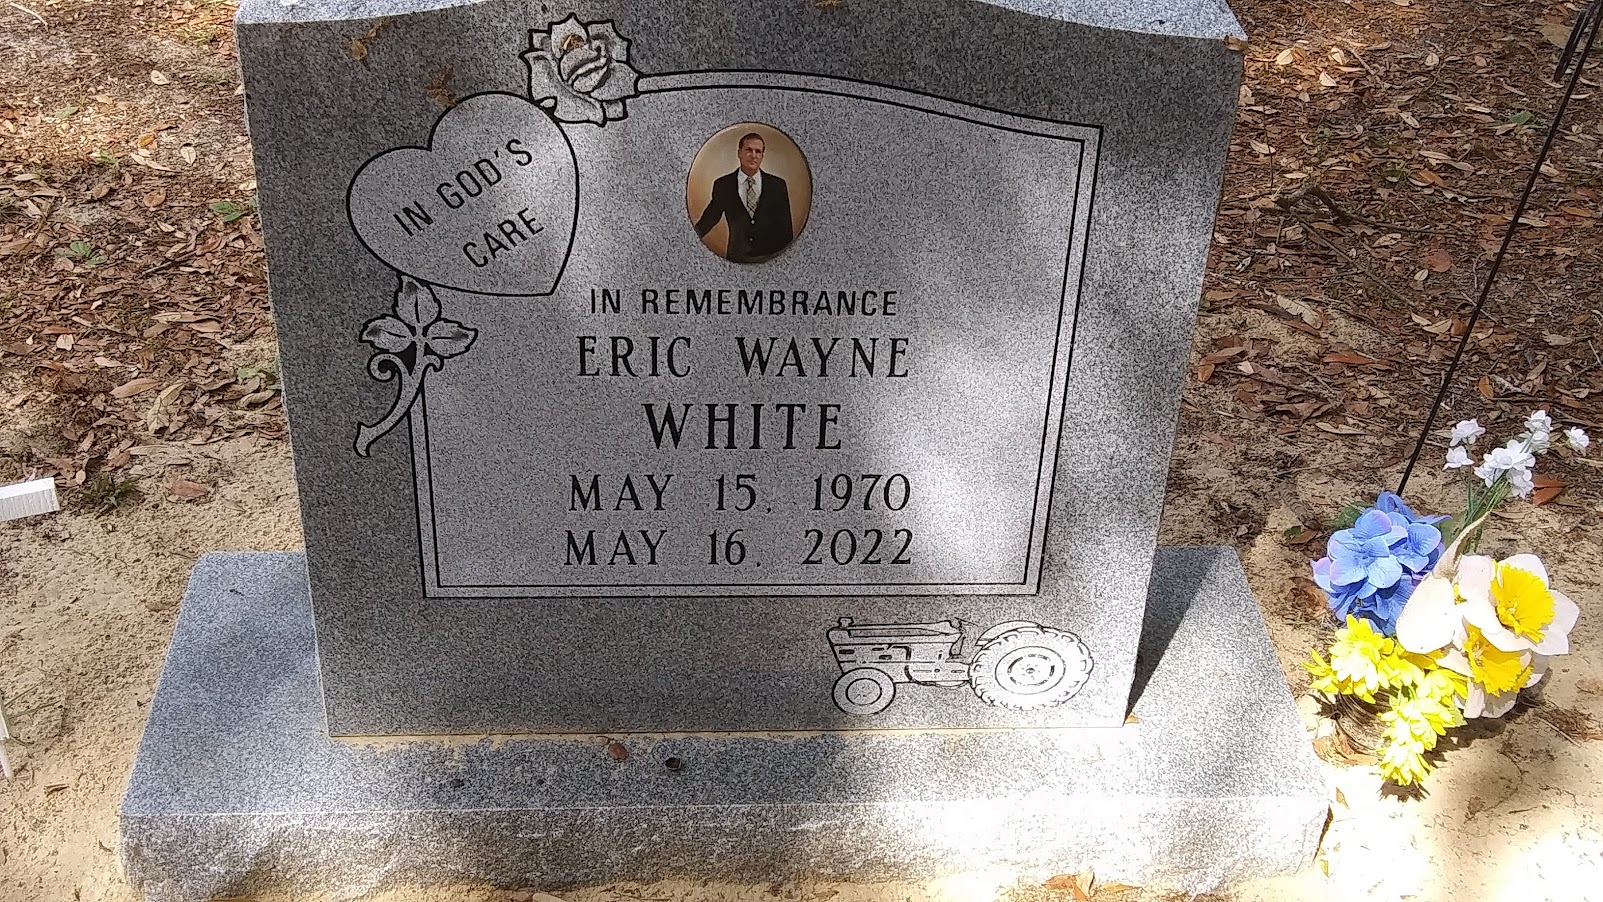 Headstone for White, Eric Wayne 